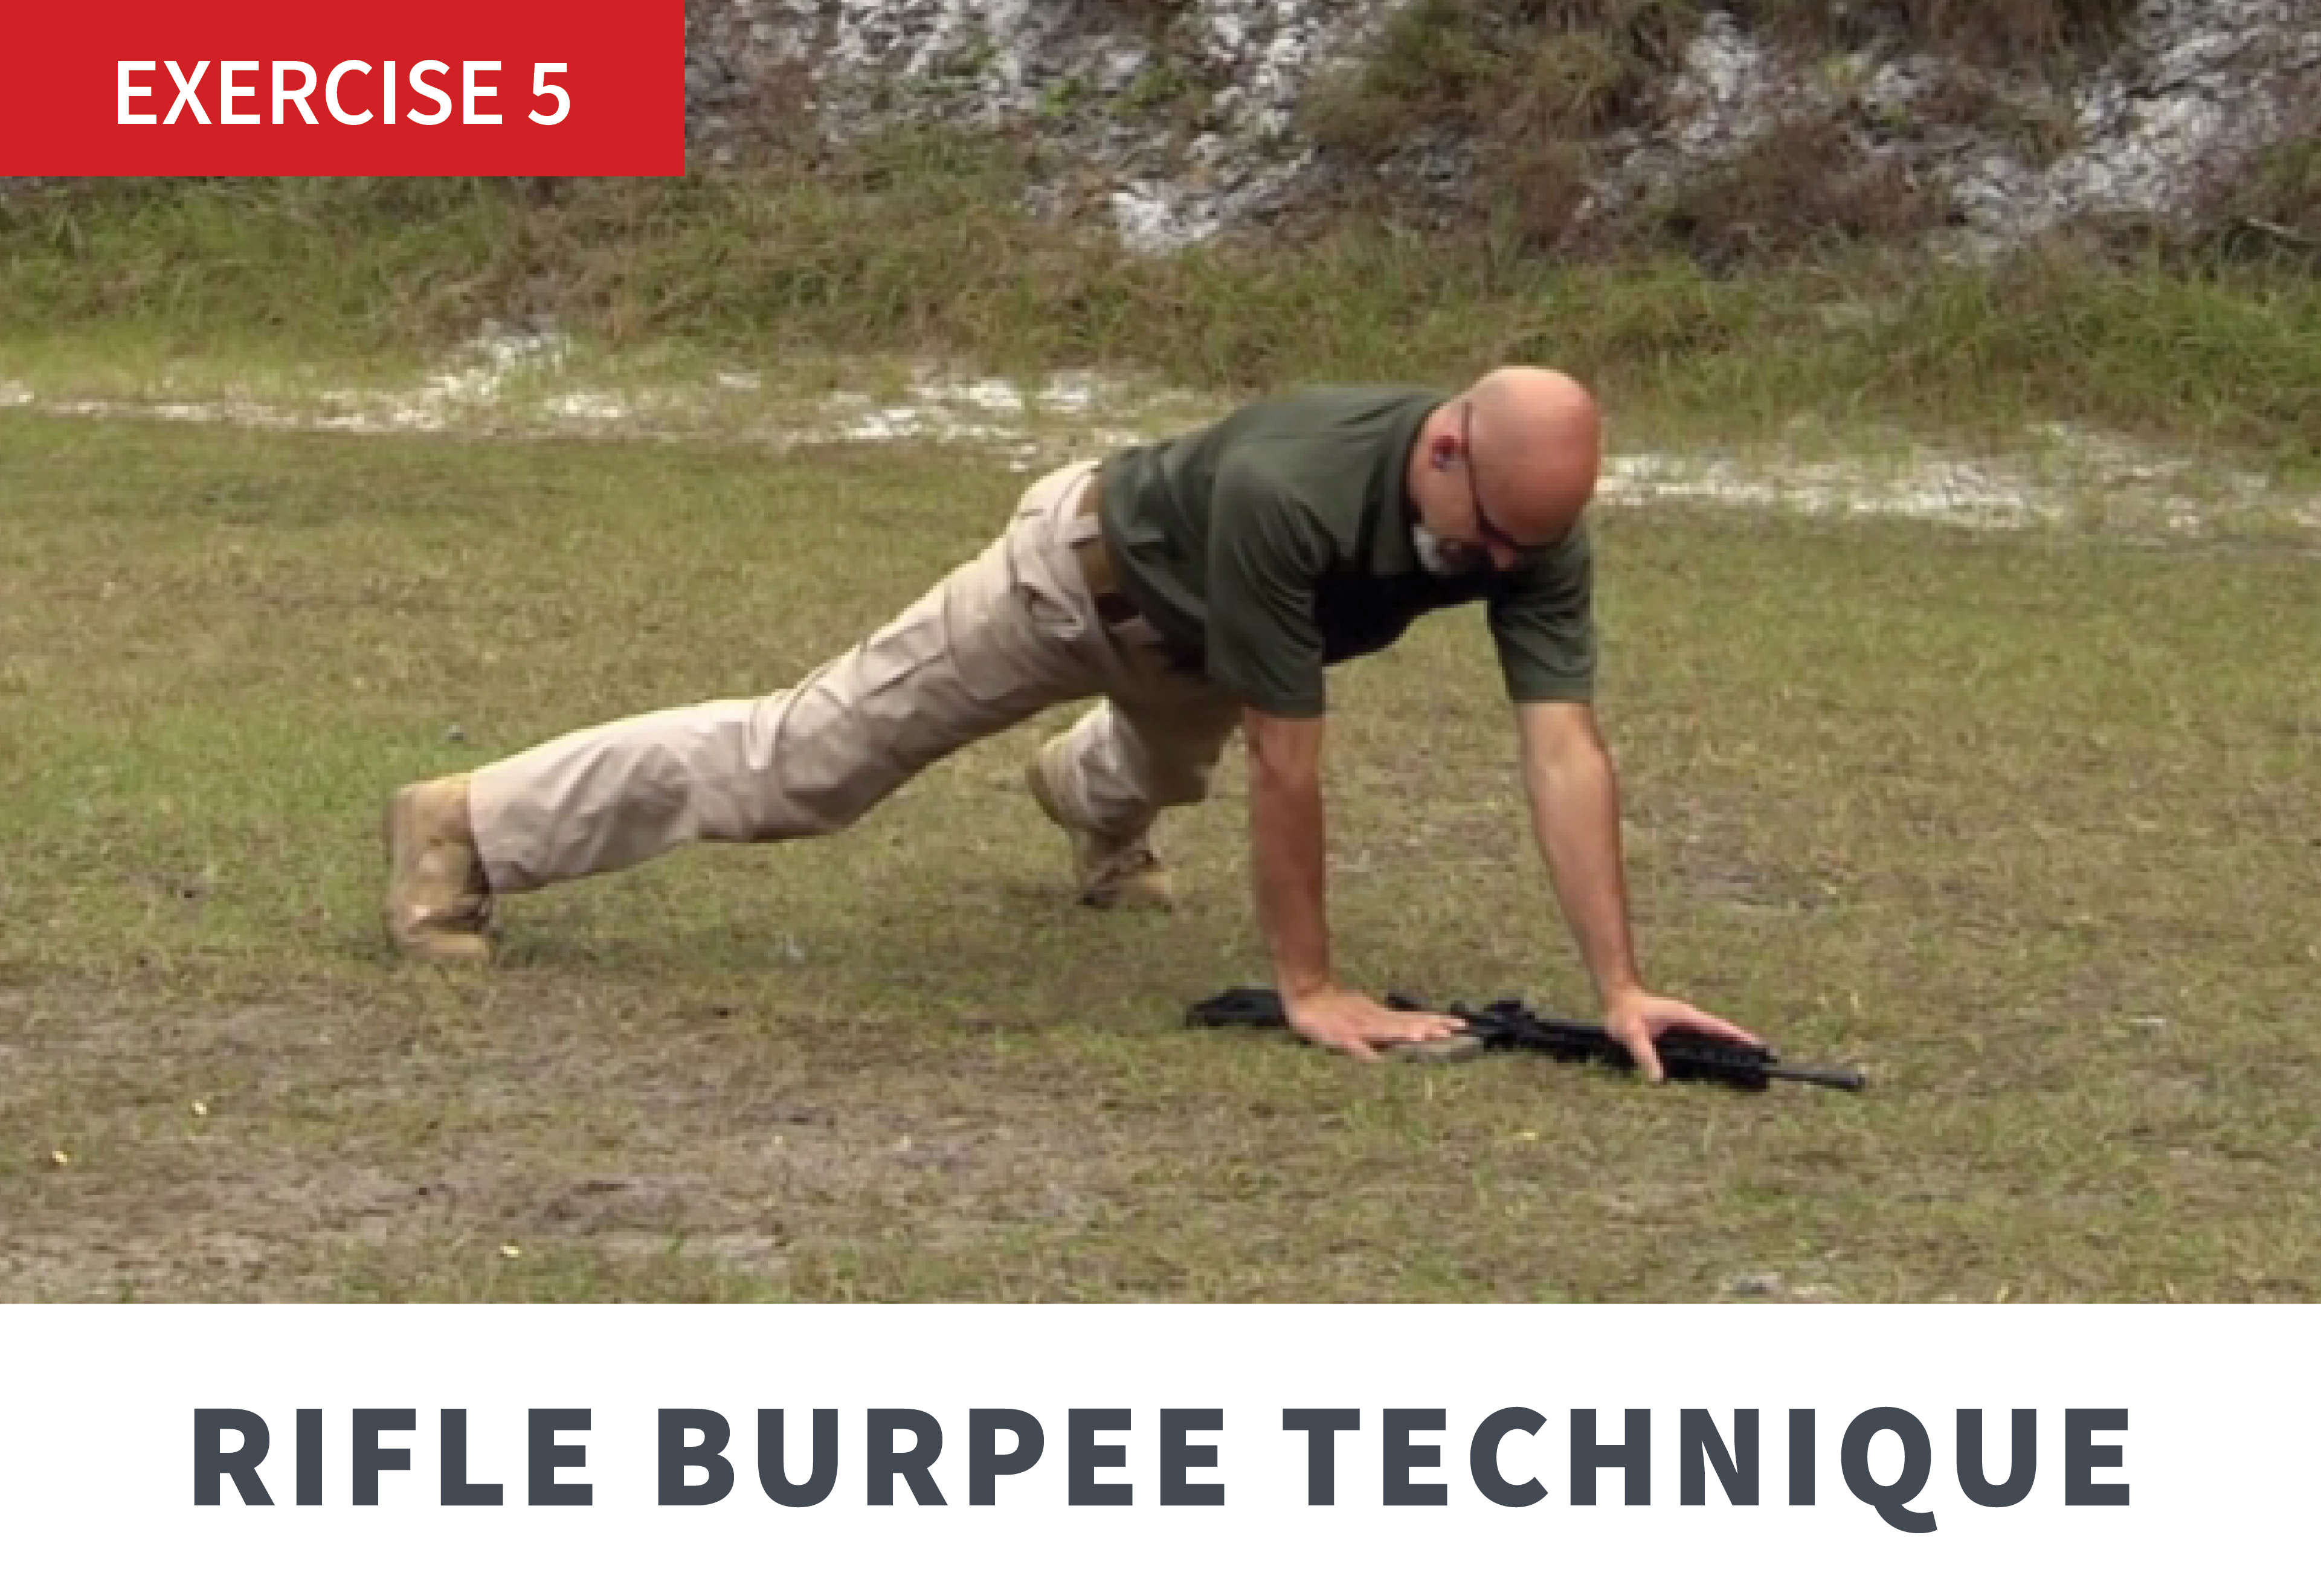 Rifle Burpee Technique